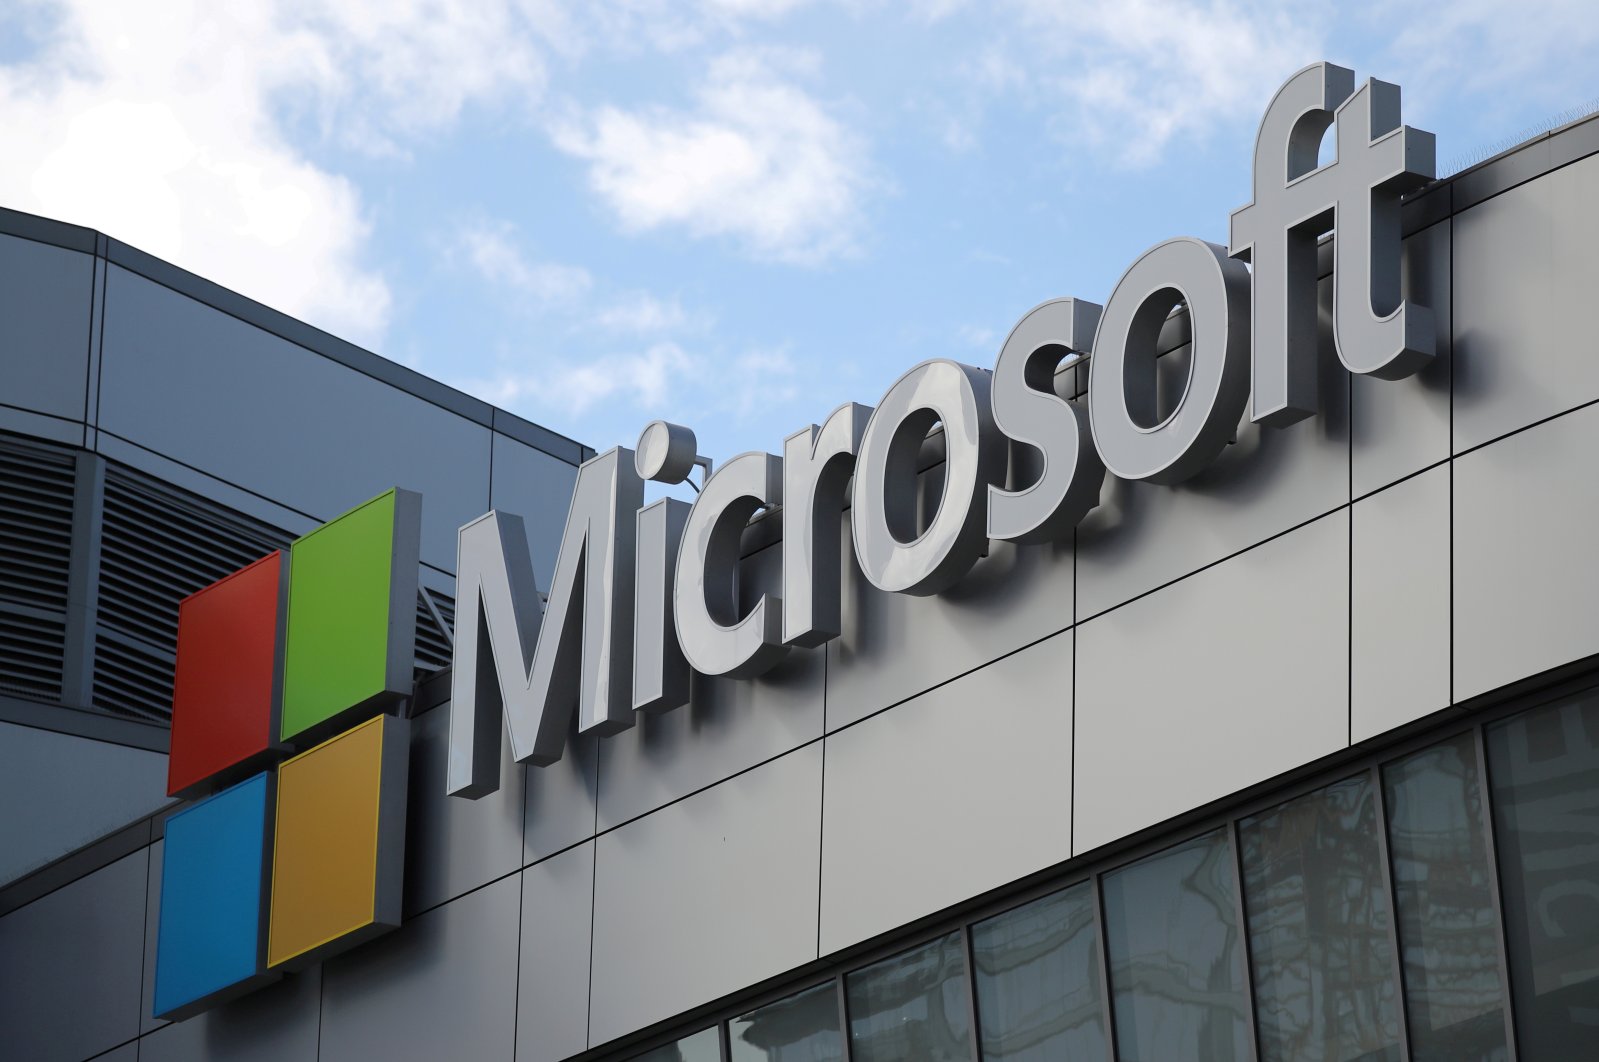 A Microsoft logo is seen in Los Angeles, California, U.S., Nov. 7, 2017. (Reuters Photo)